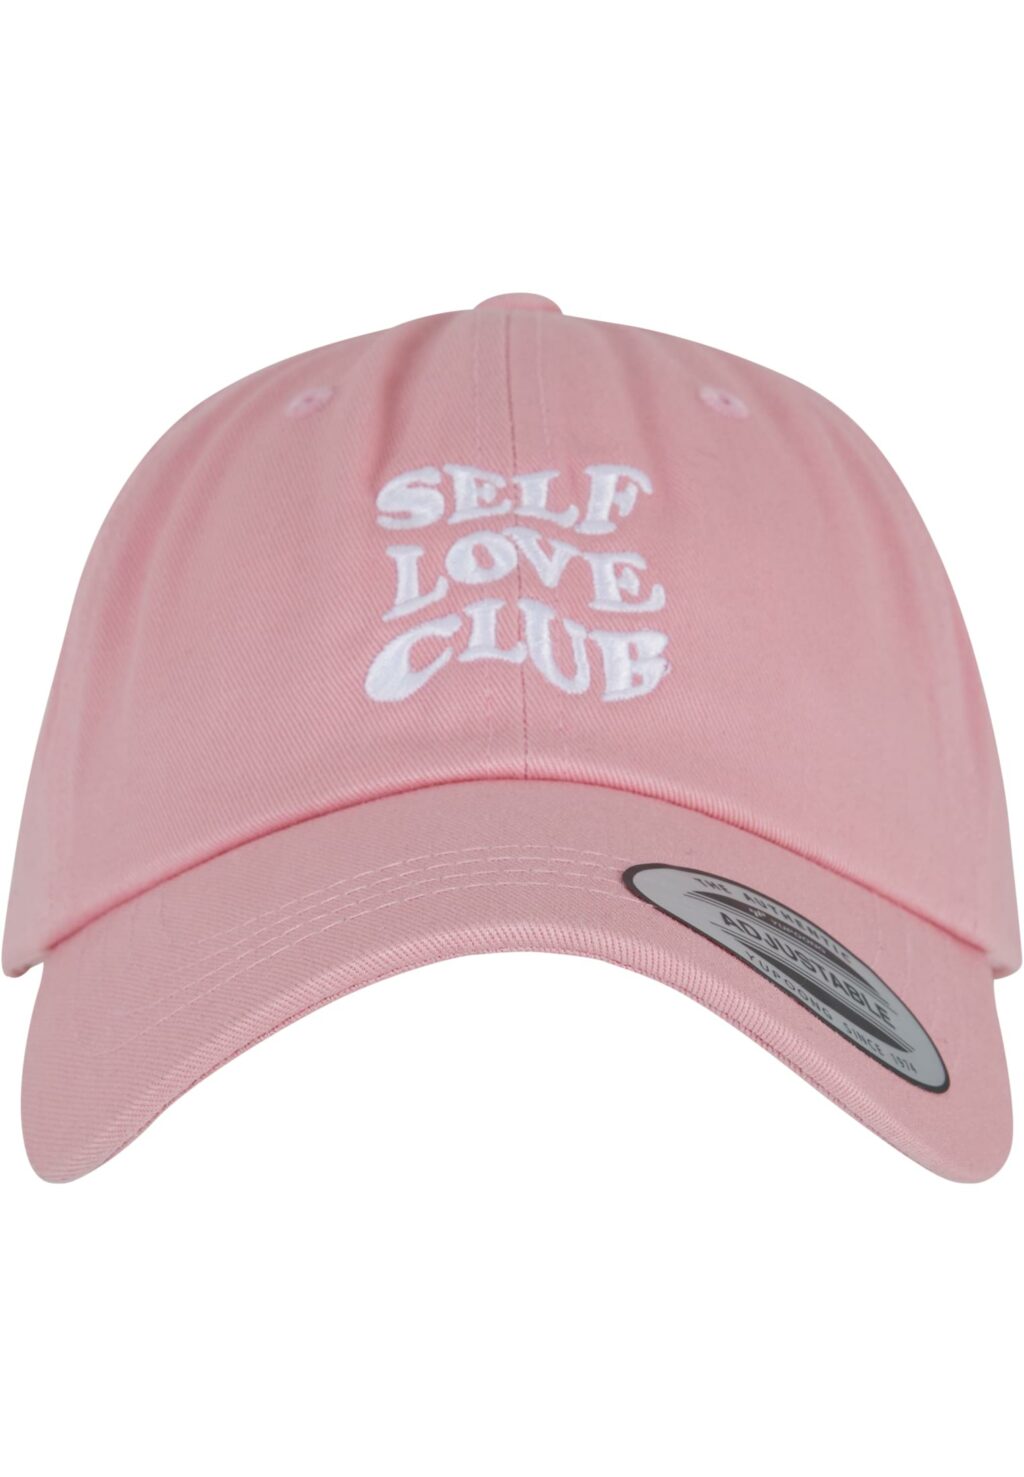 Self Love Club Cap pink one BE073